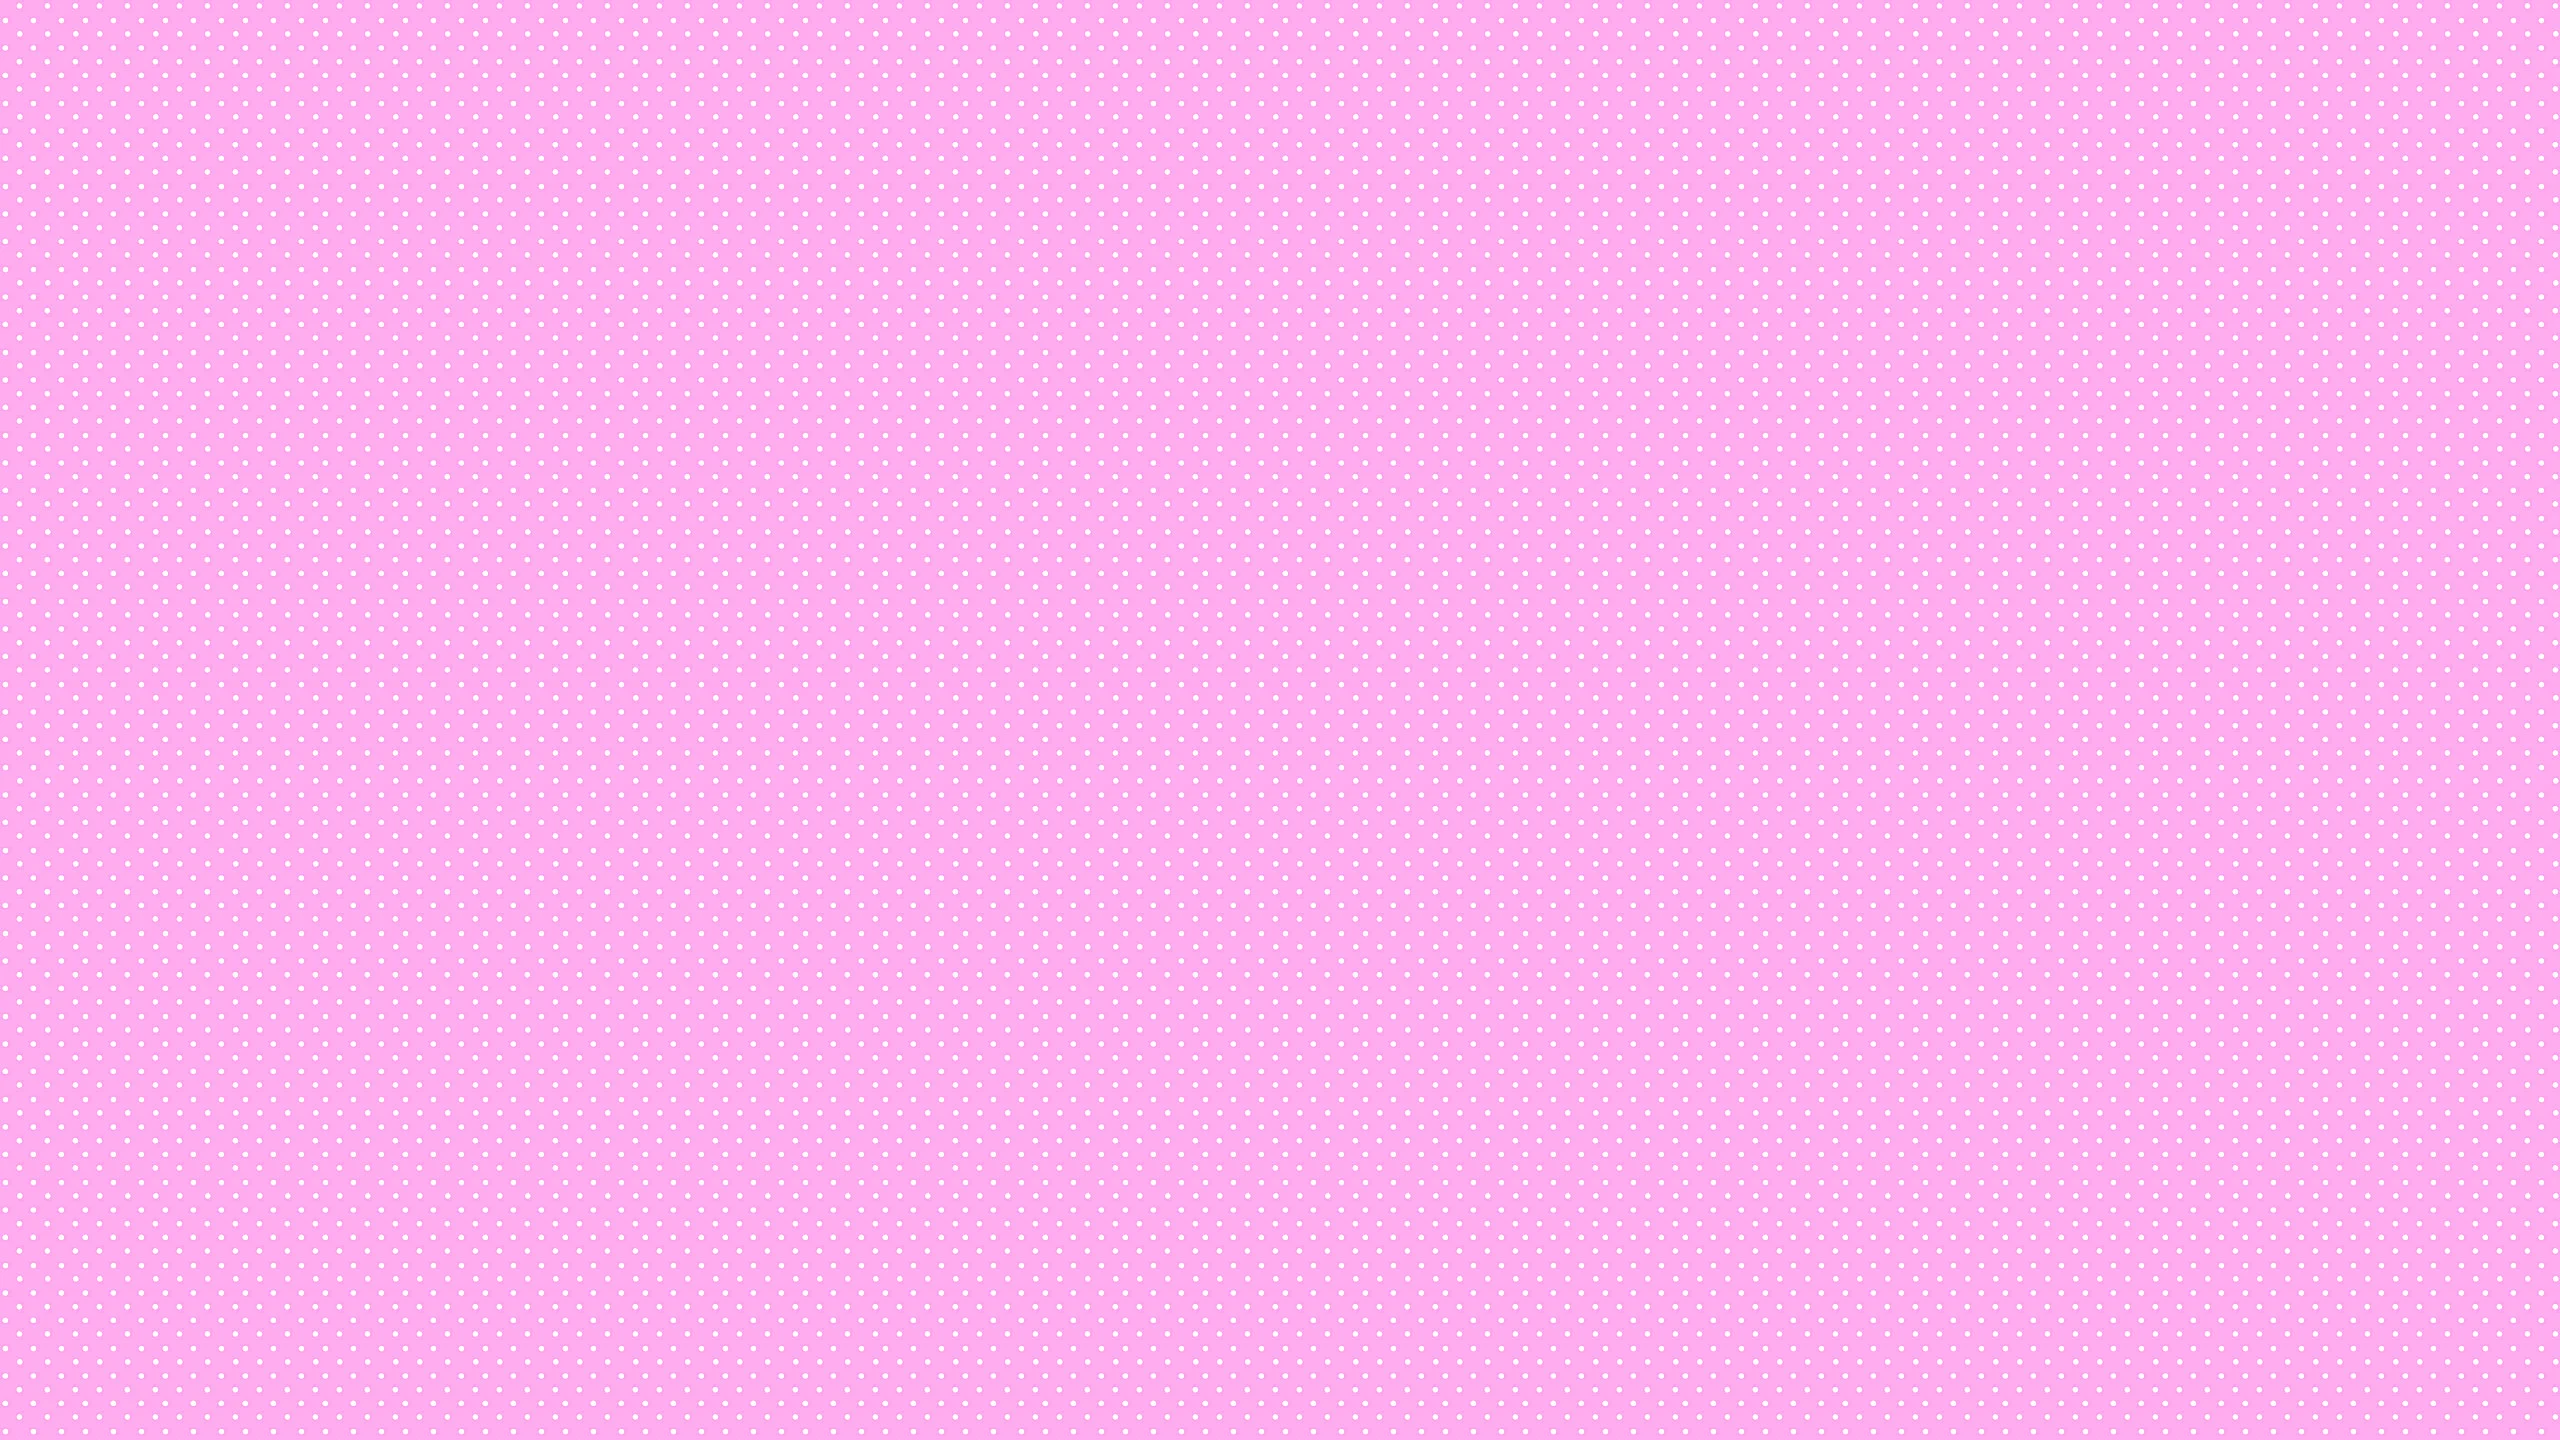 Pastel Pink Dots Desktop Wallpaper is easy. Just save the wallpaper